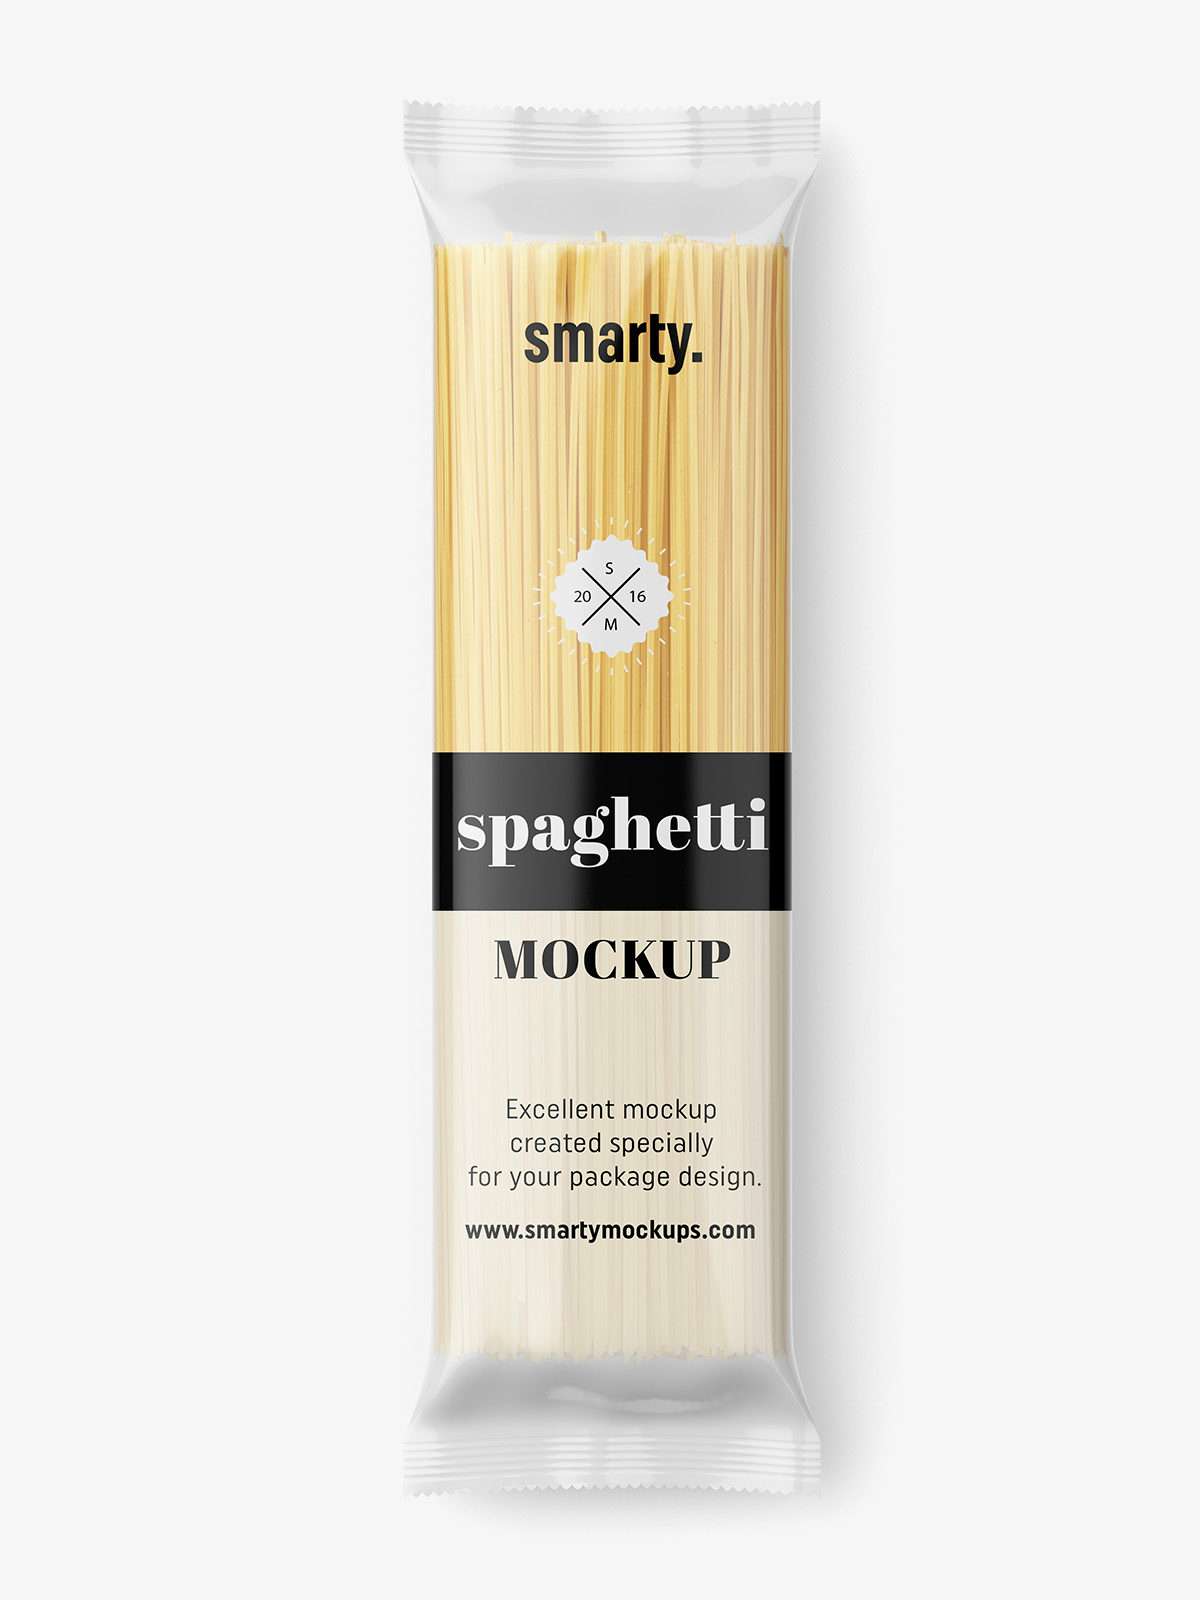 Spaghetti packaging mockup - Smarty Mockups